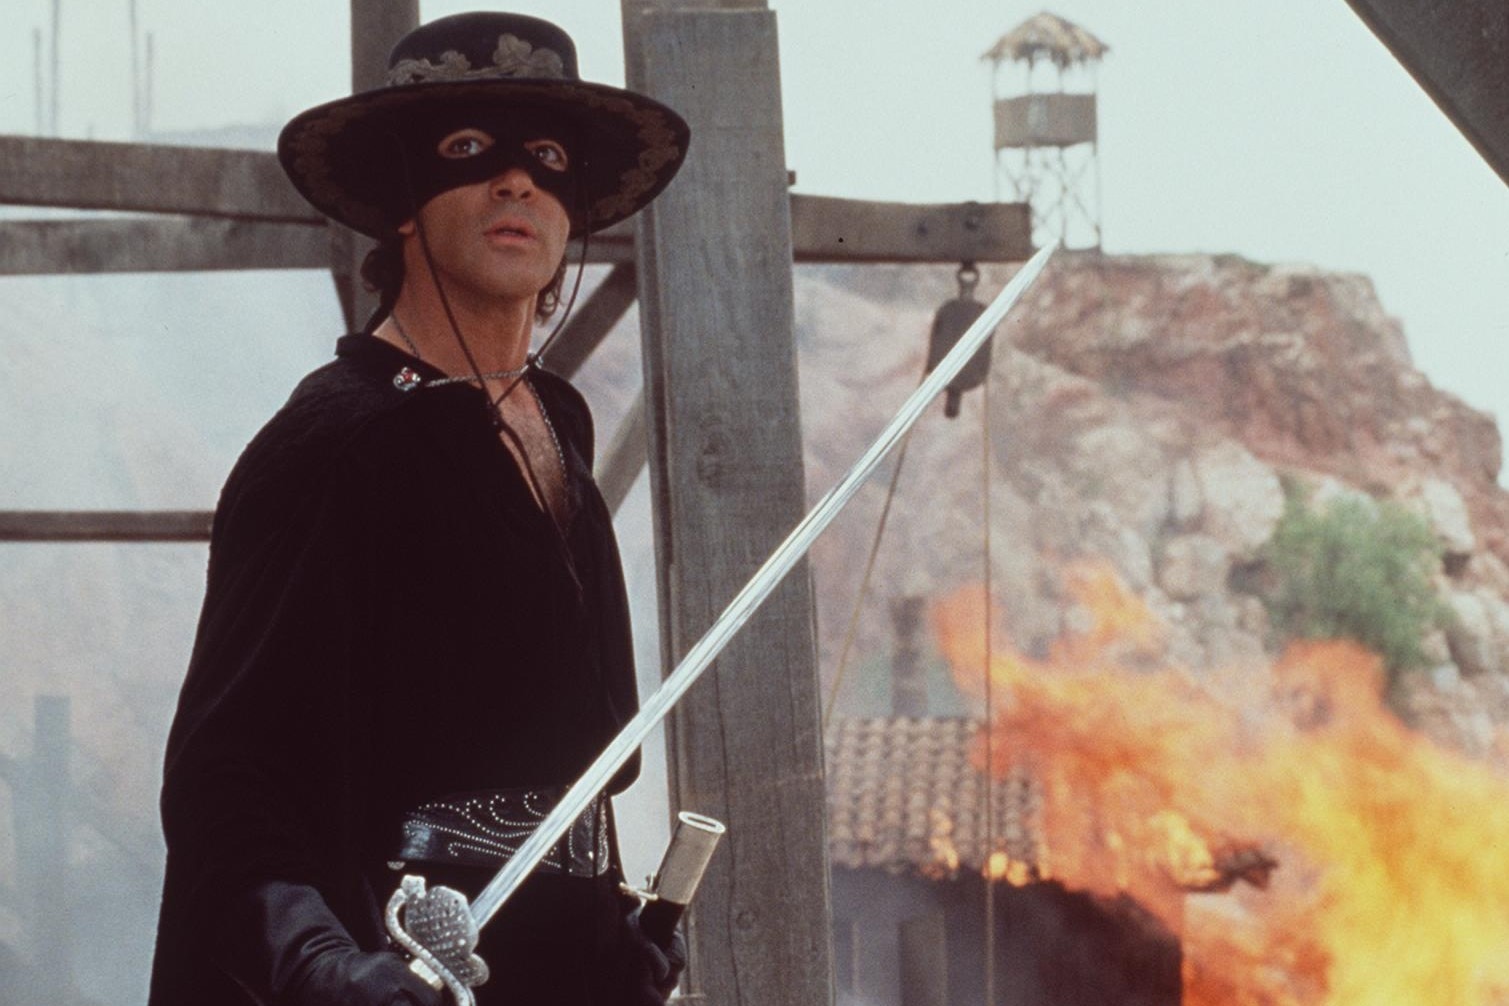 Antonio Banderas stars in The Mask of Zorro